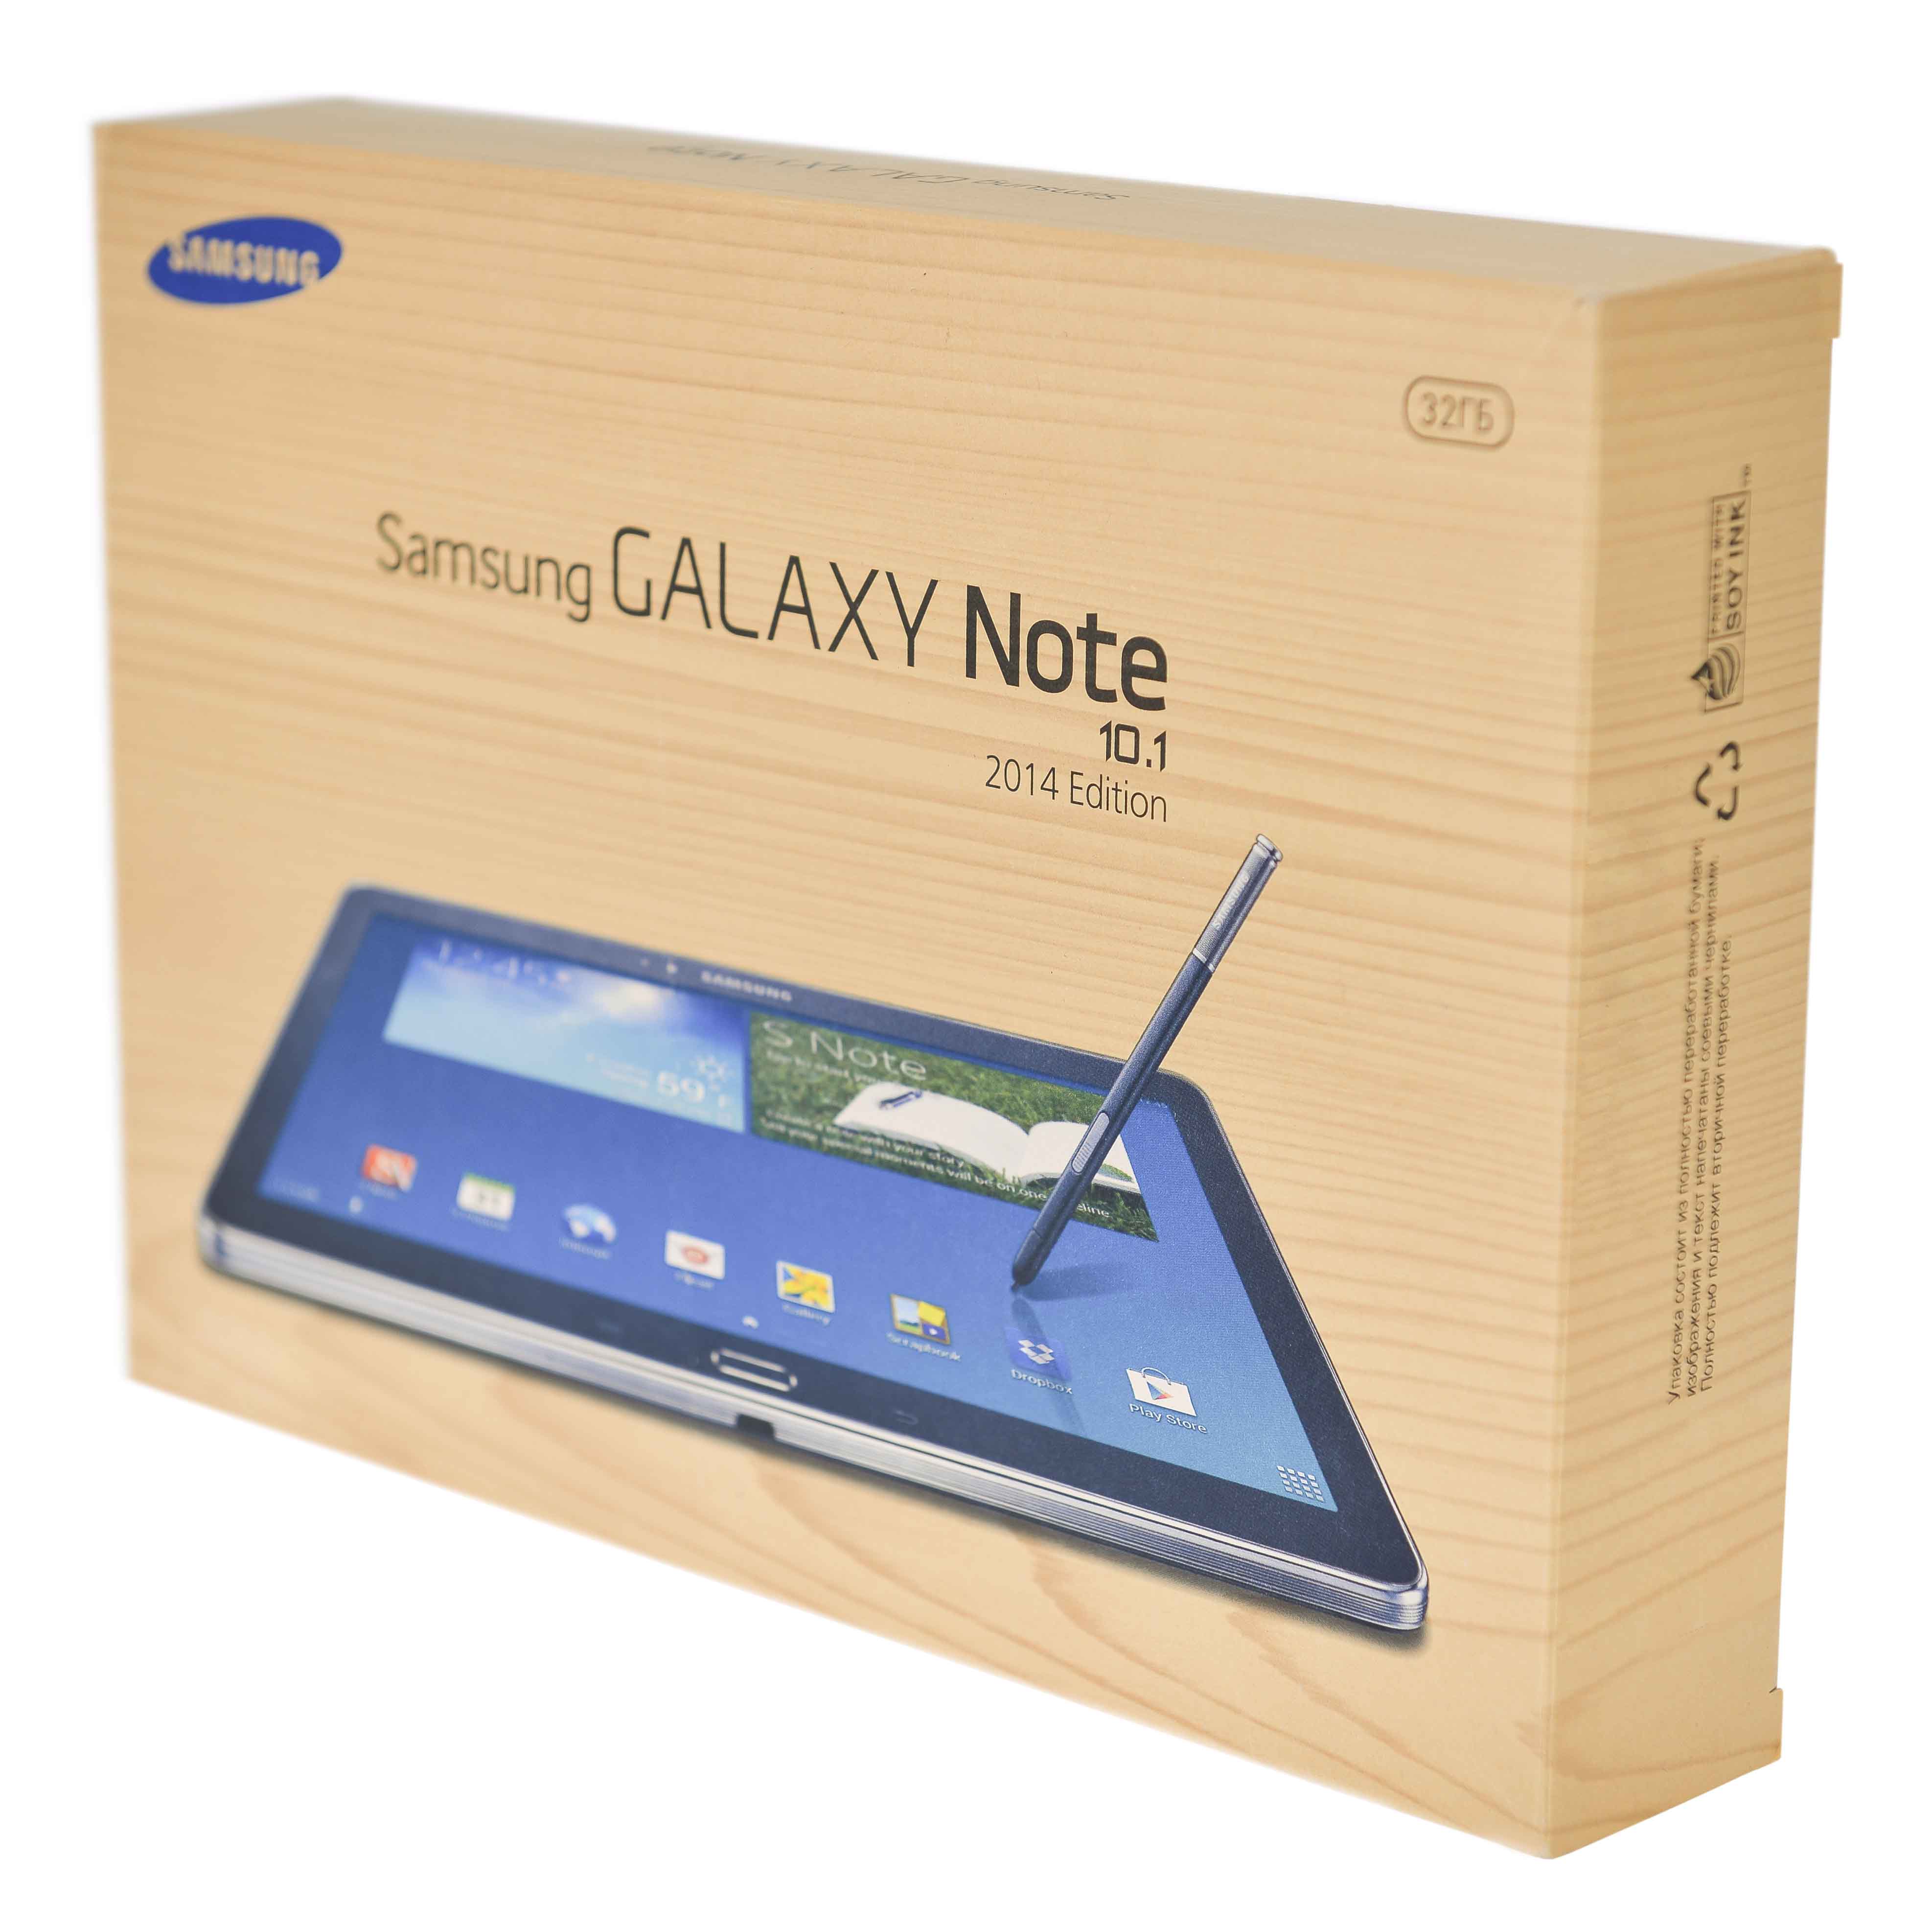 Galaxy note 2014. Samsung Galaxy Note 10.1 n8000. Galaxy Note 10 характеристики. Note 2014. Samsung Note 10.1 2014 Edition купить.